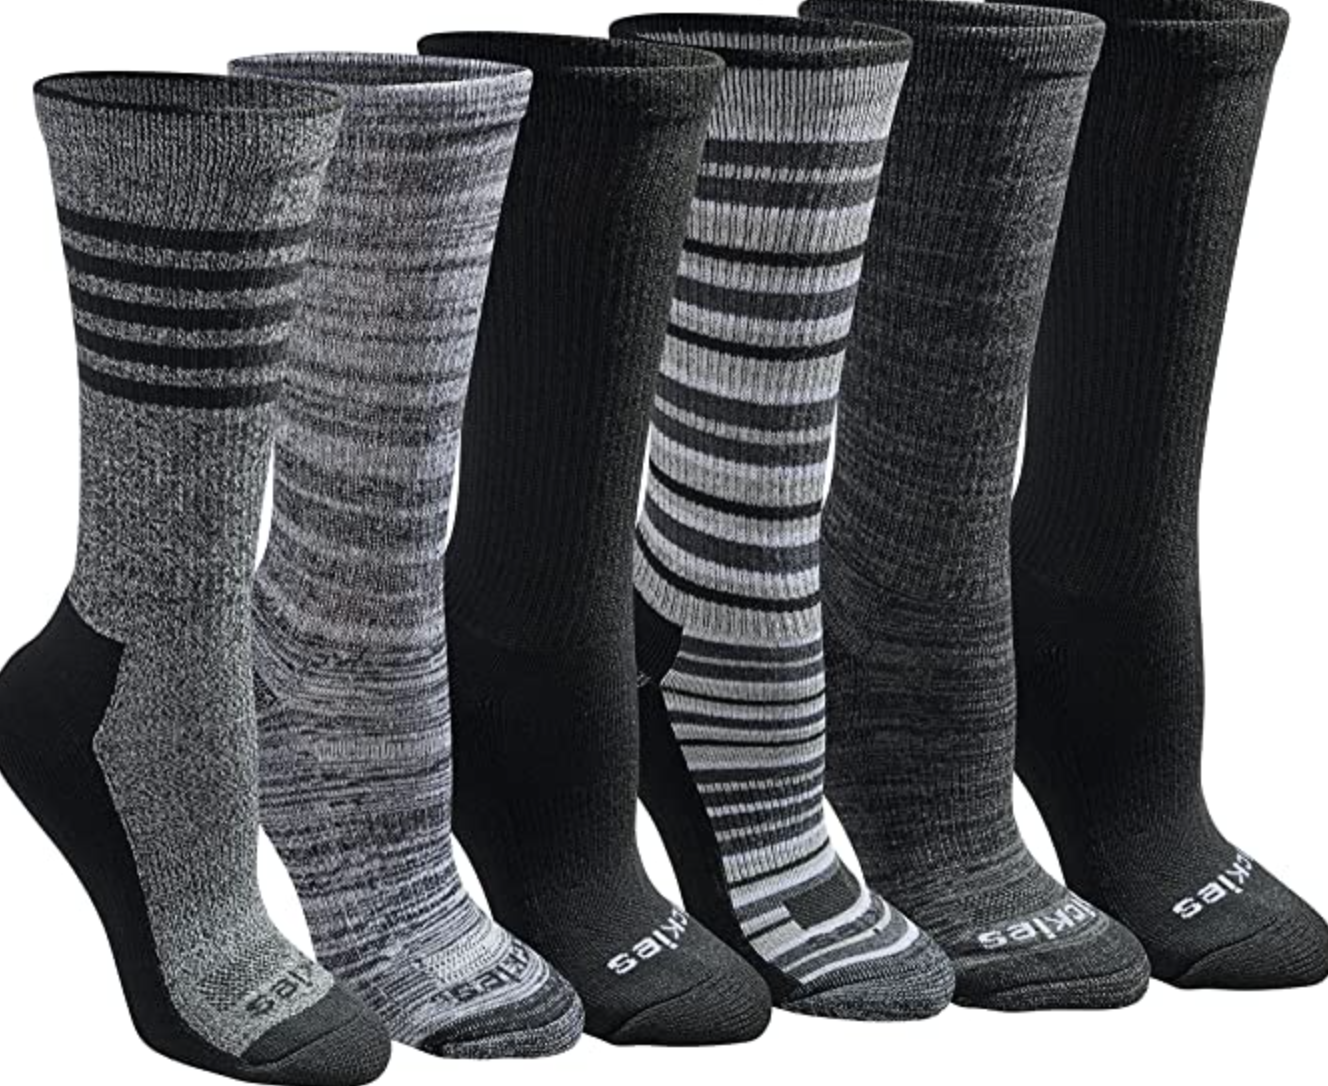 Dickies Dri-tech Moisture Control Socks